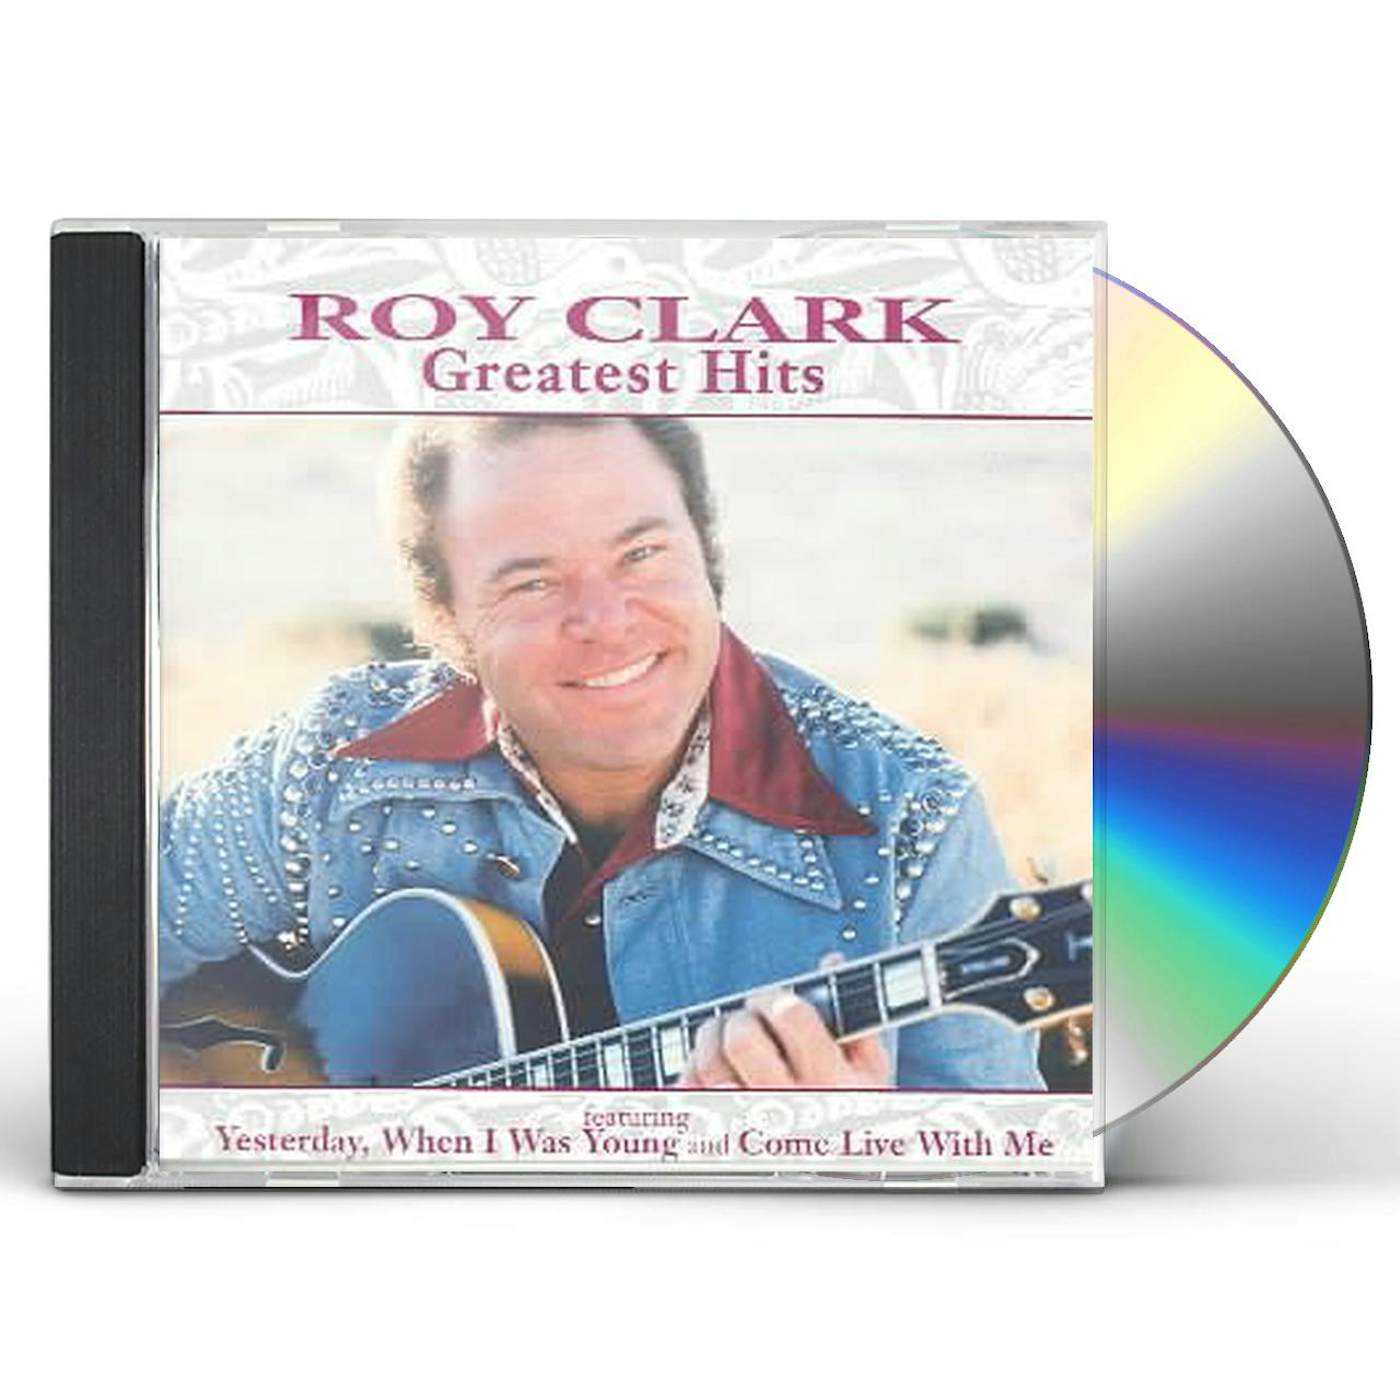 Roy Clark Greatest Hits CD